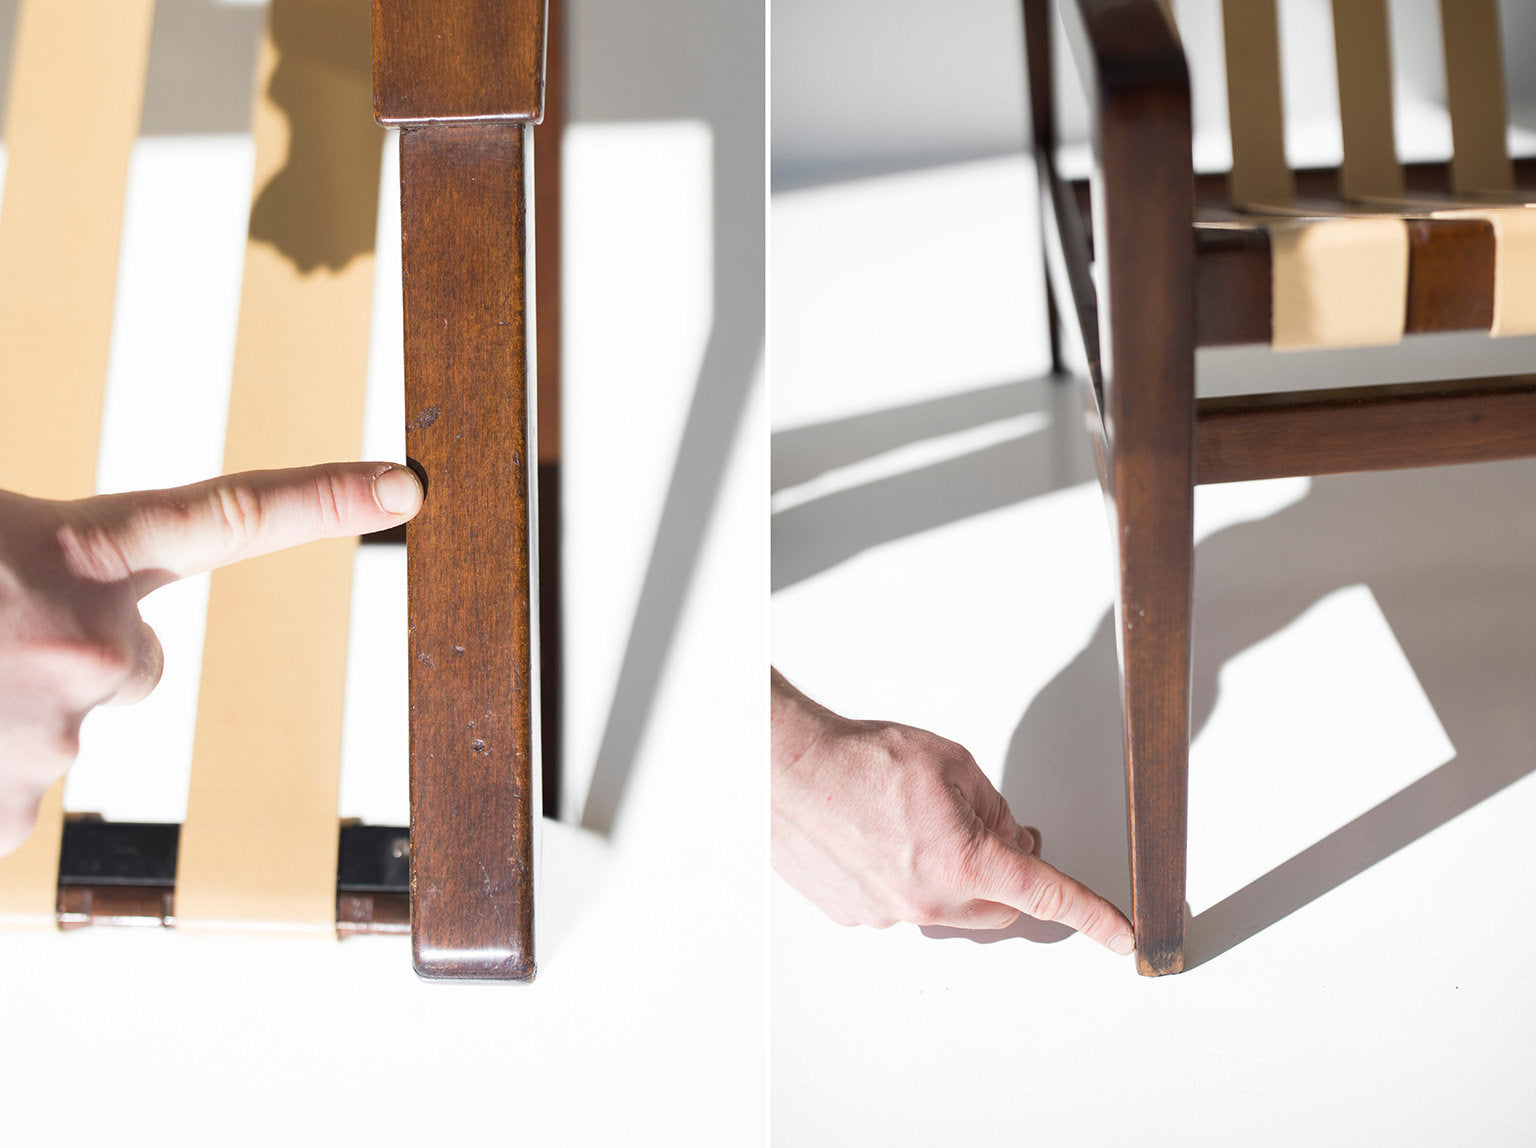 Rare Ib Kofod Larsen Lounge Chair for Selig Imports - 03091801